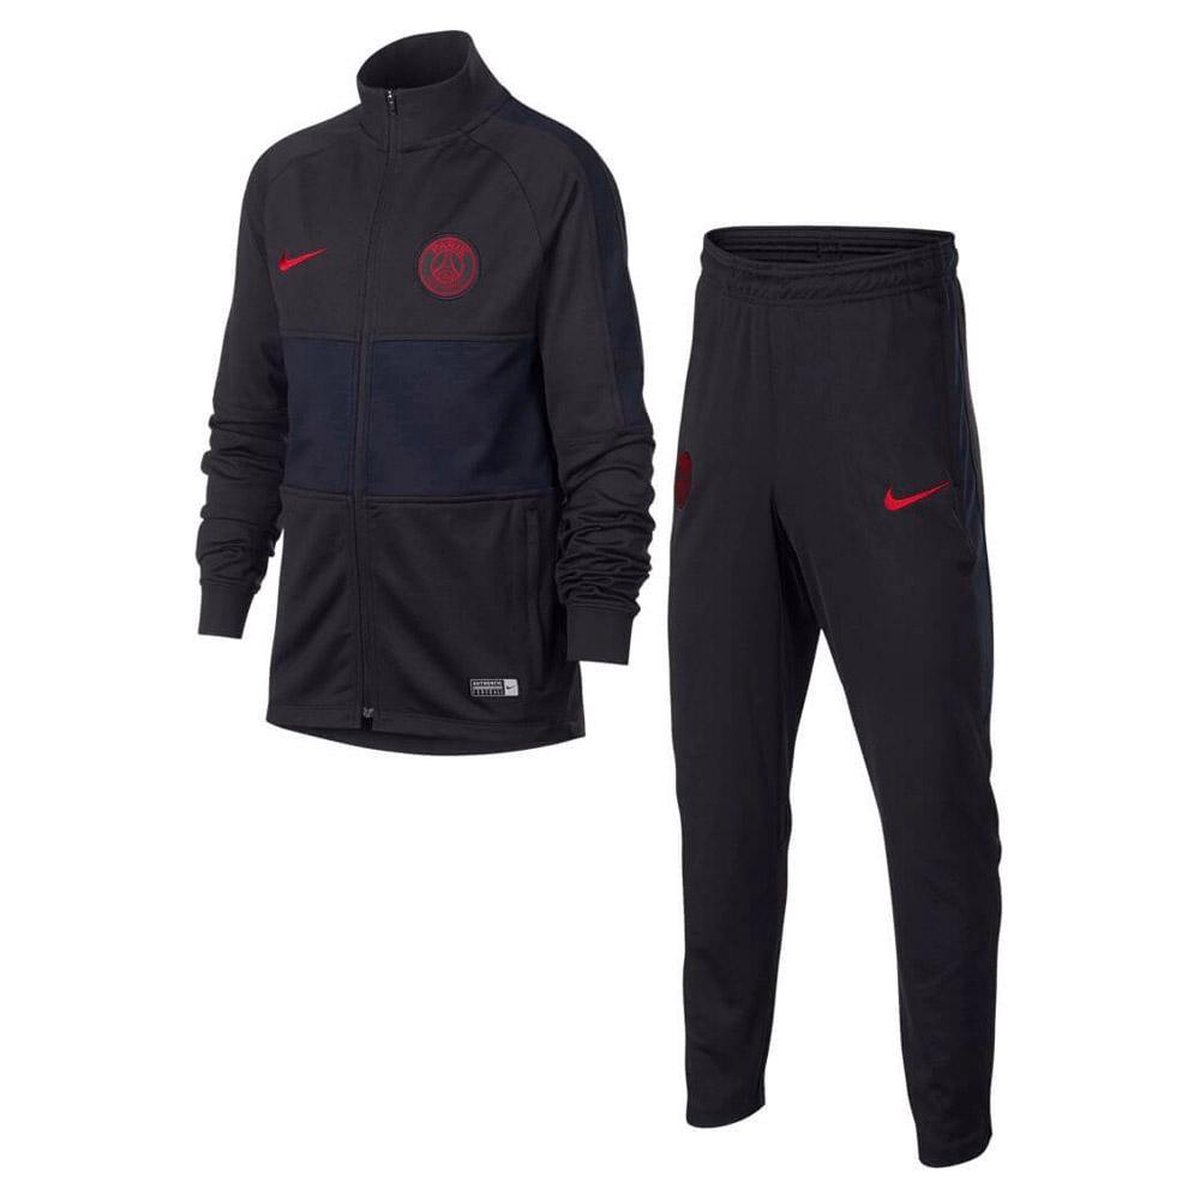 meester Schijnen Alice Nike PSG Dry Strike 2019/2020 trainingspak jongens antraciet/rood/marine |  bol.com